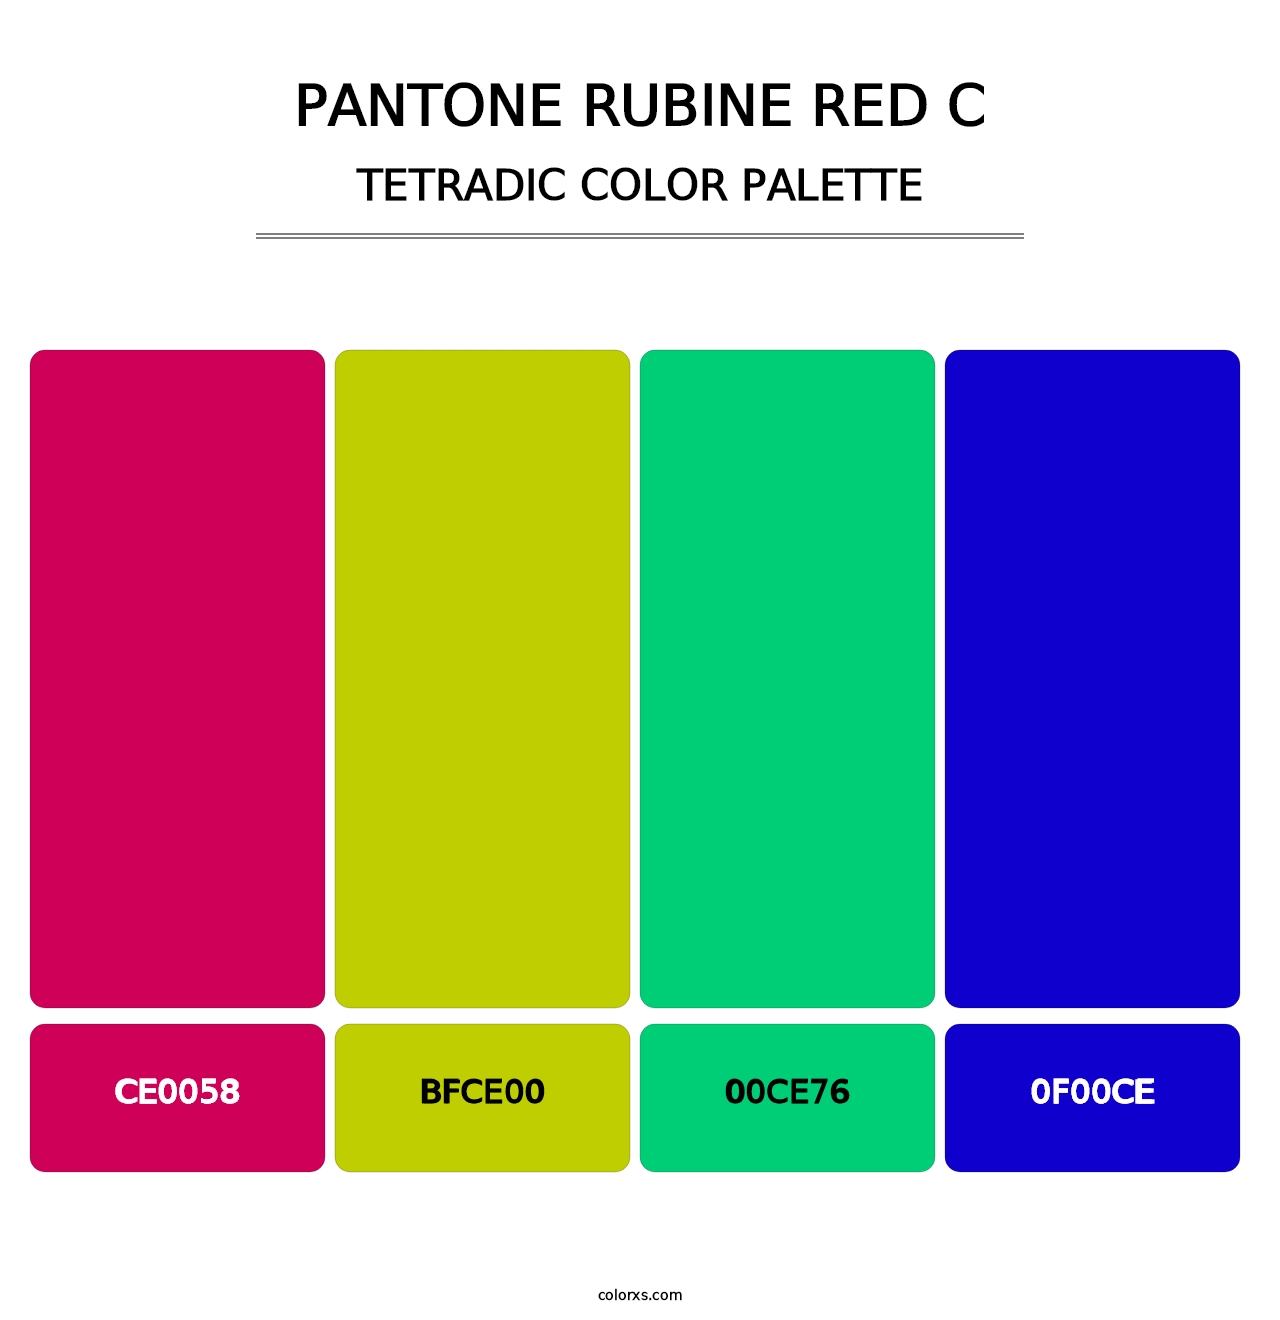 PANTONE Rubine Red C - Tetradic Color Palette